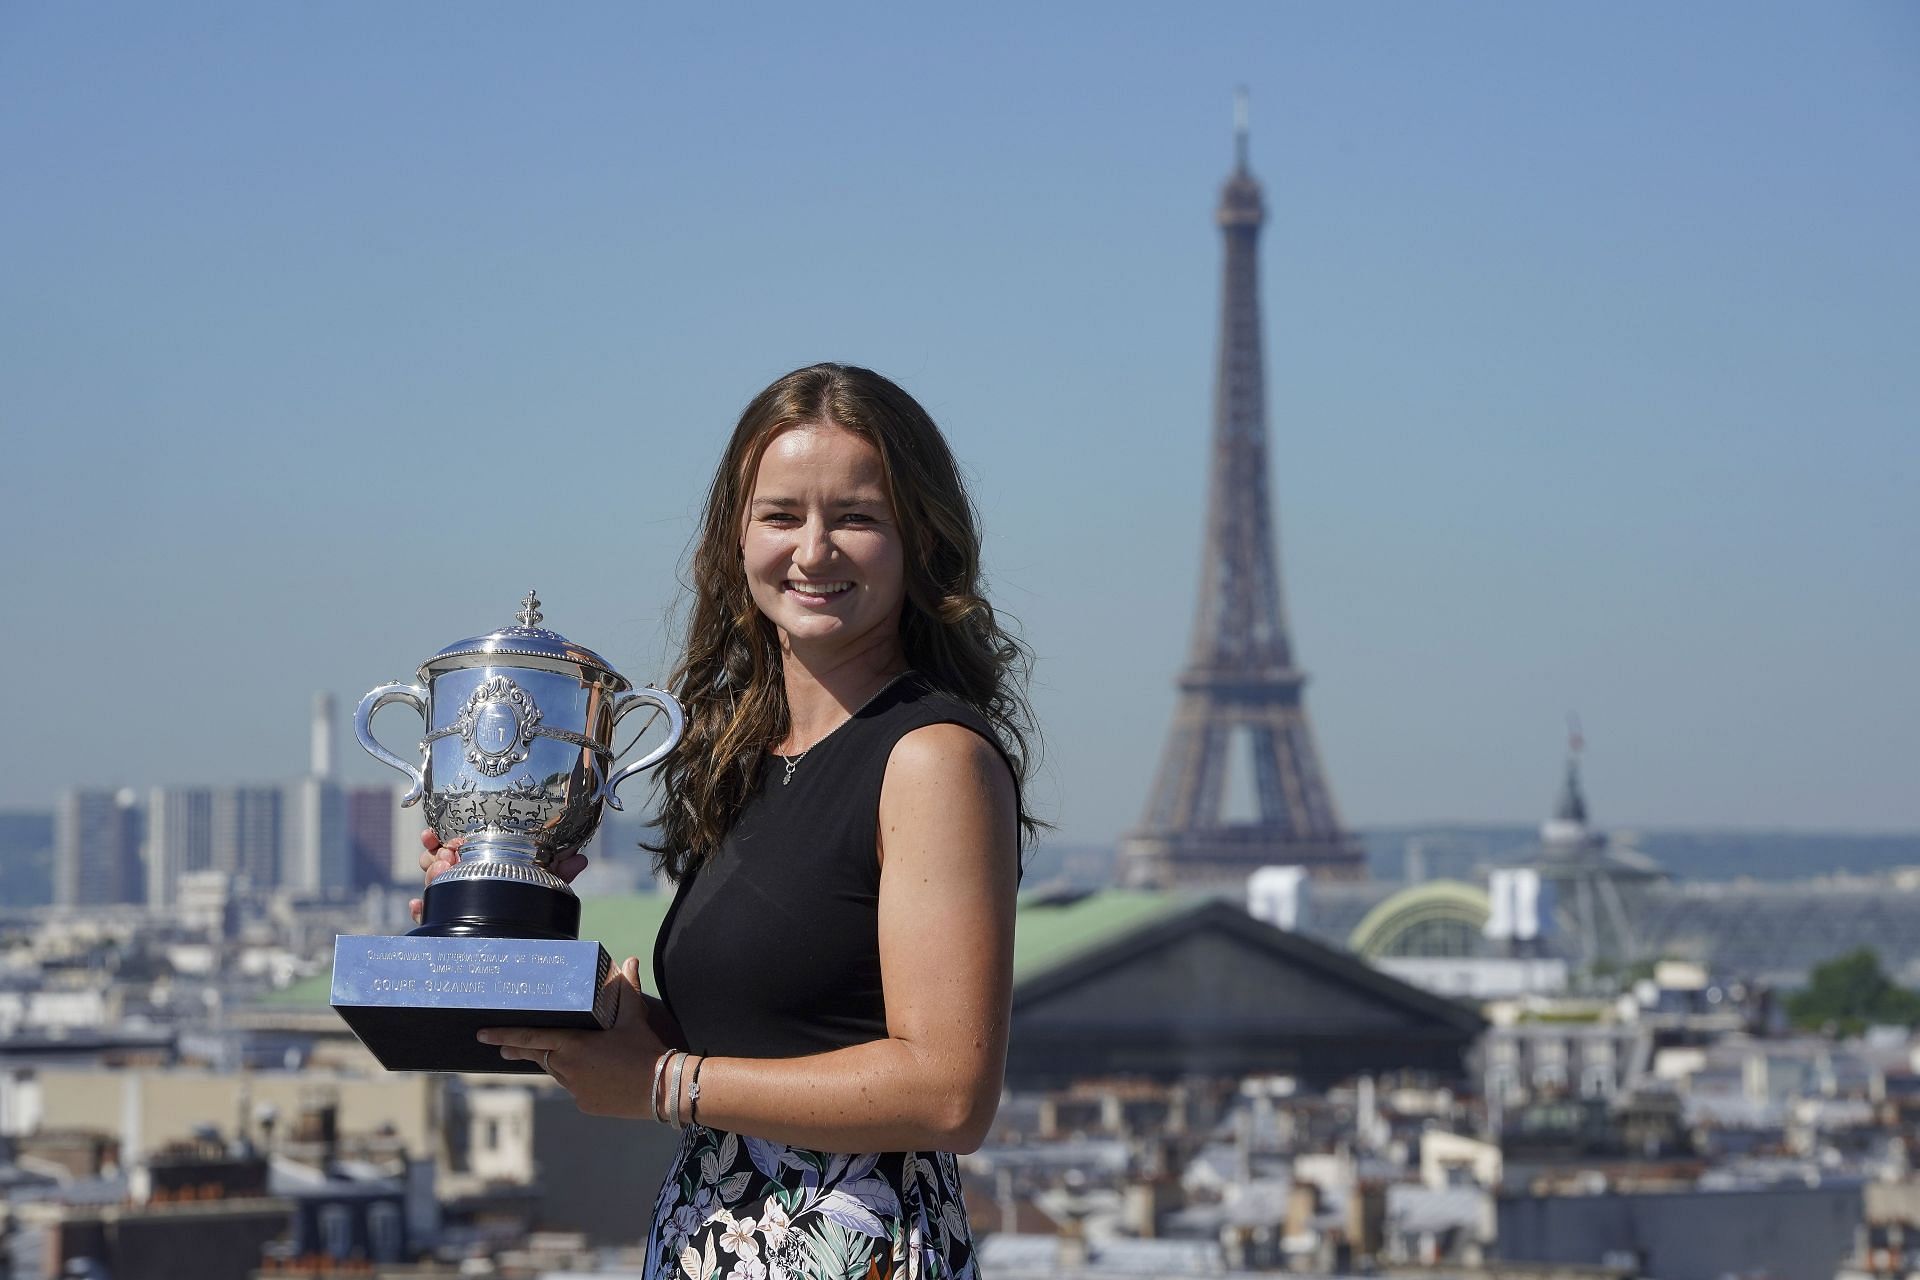 2021 Roland Garros Winner - Barbora Krejcikova